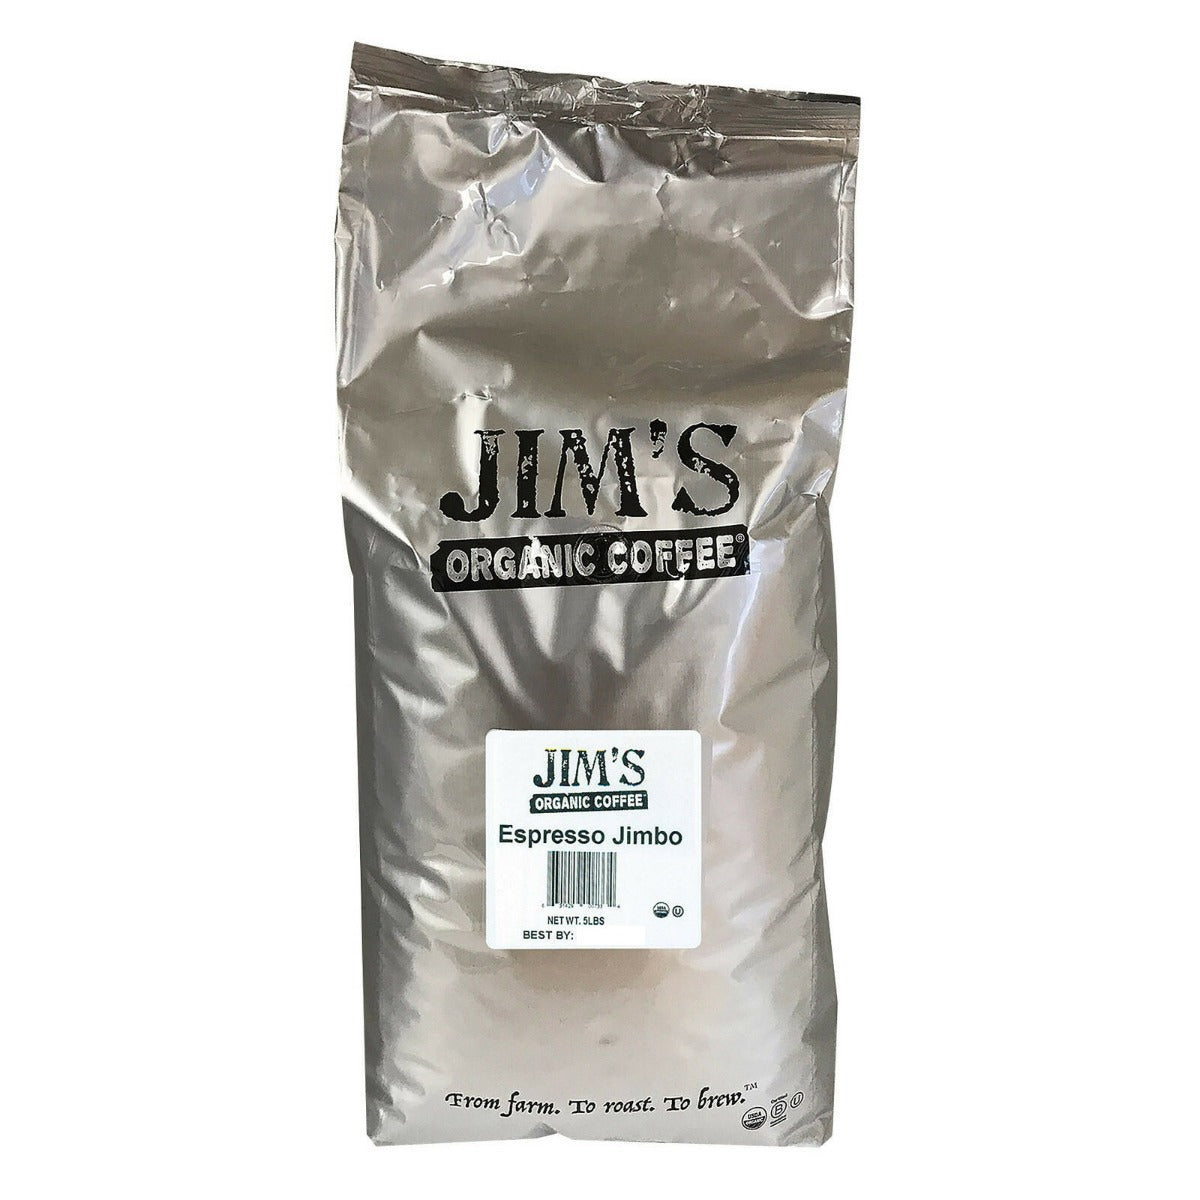 JIMS ORGANIC COFFEE: Organic Espresso Jimbo Coffee, 5 lb - Vending Business Solutions